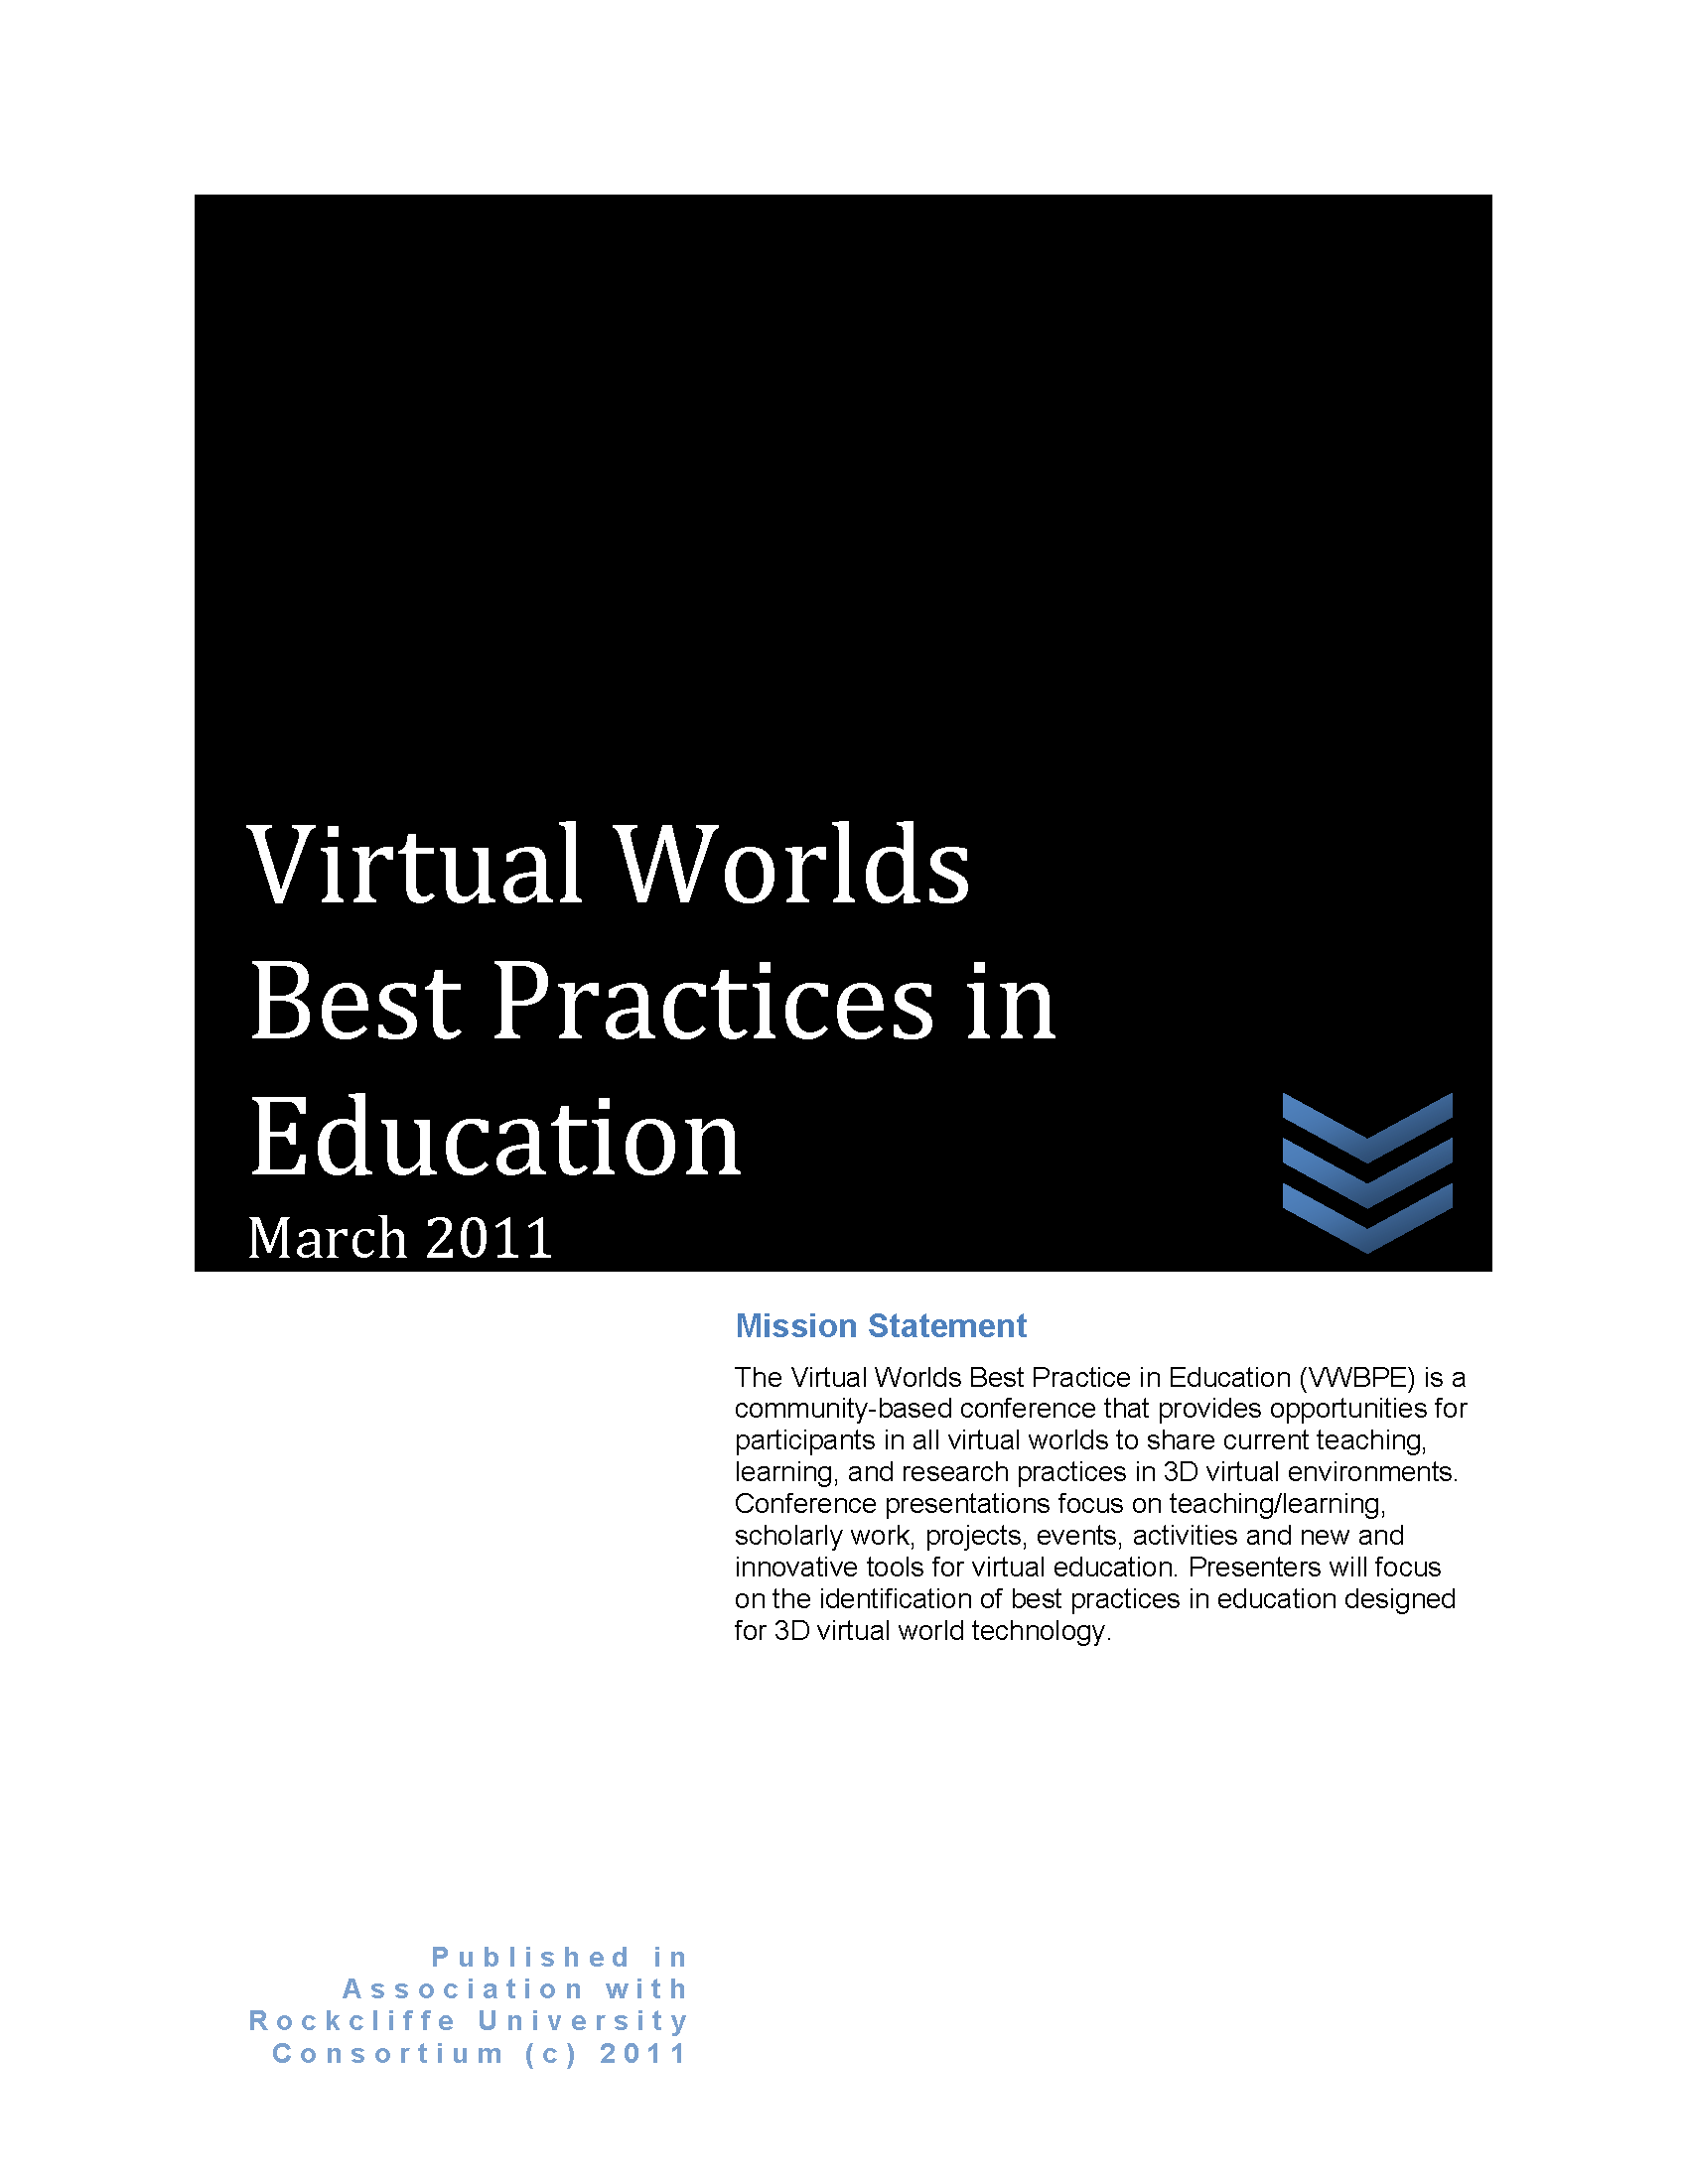 Journal of Virtual Studies Volume 2 Issue 1